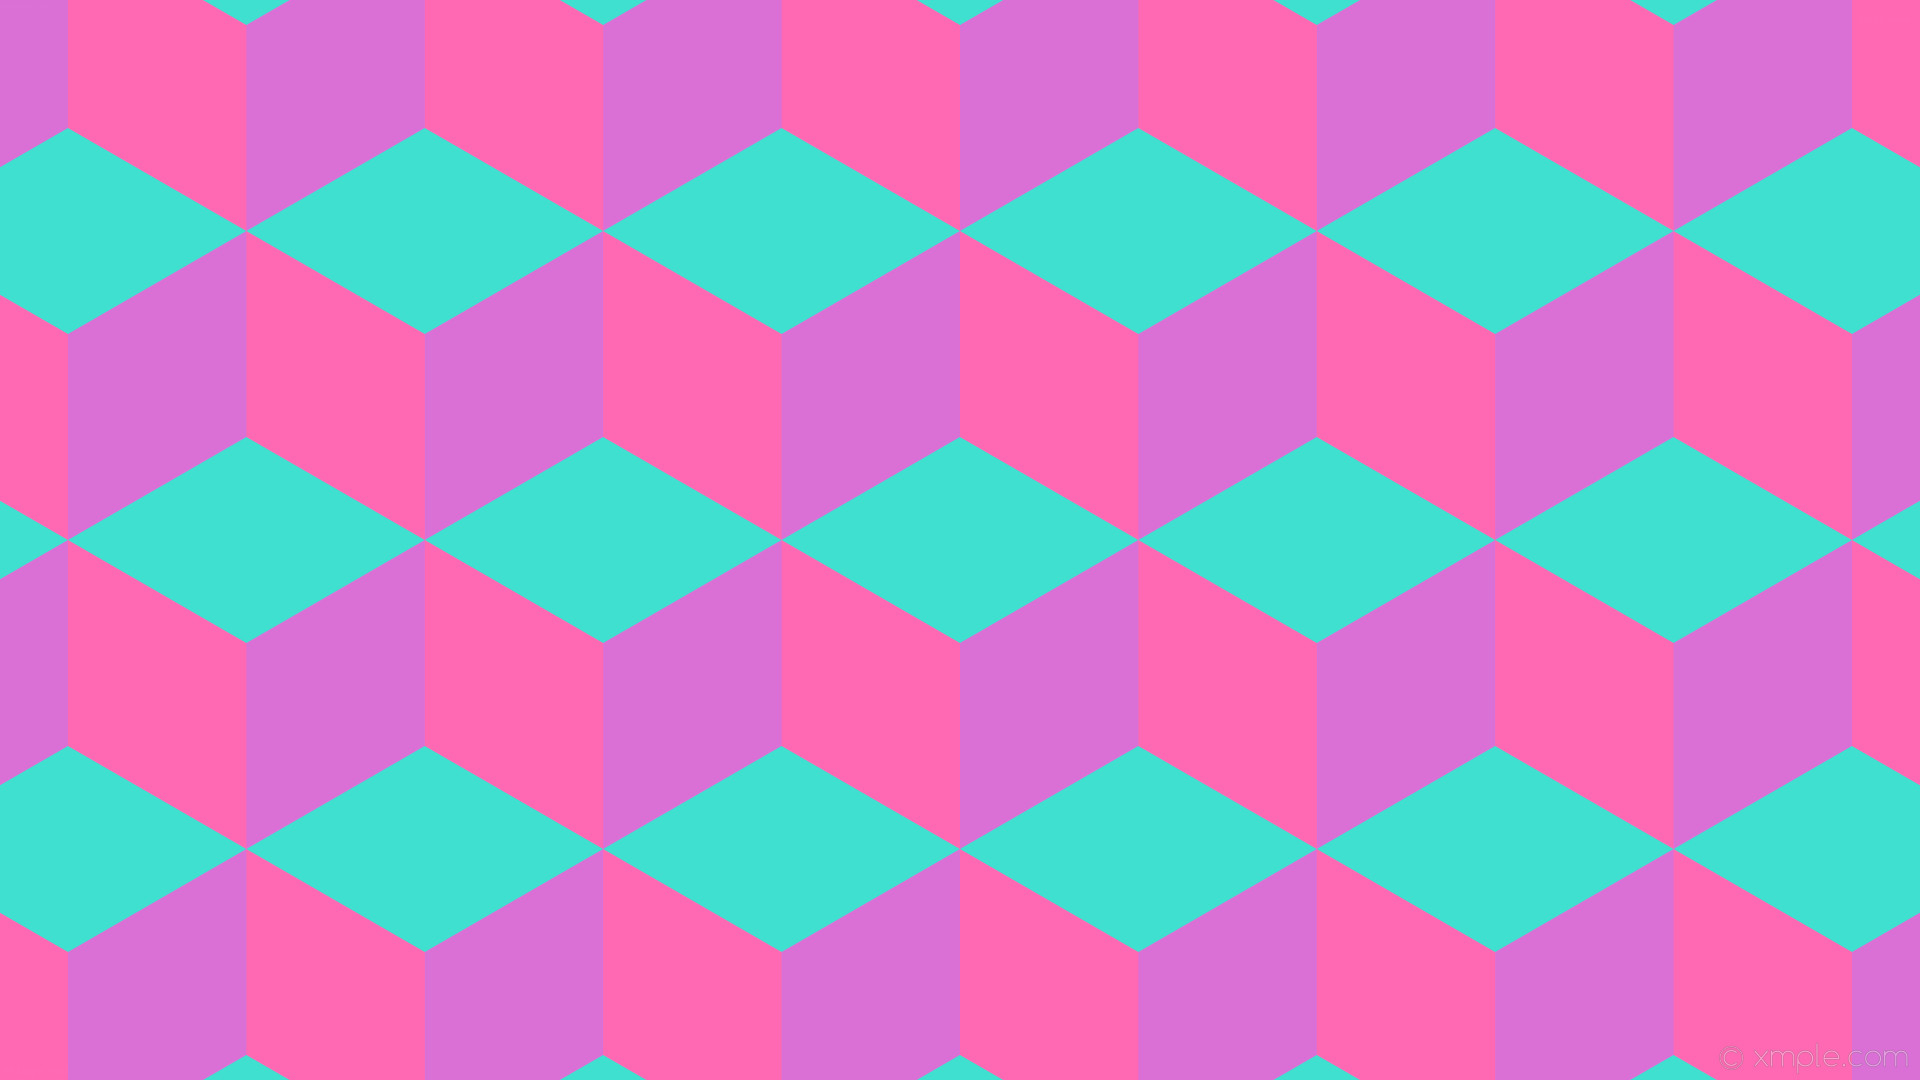 1920x1080 wallpaper purple blue pink 3d cubes turquoise hot pink orchid #40e0d0  #ff69b4 #da70d6